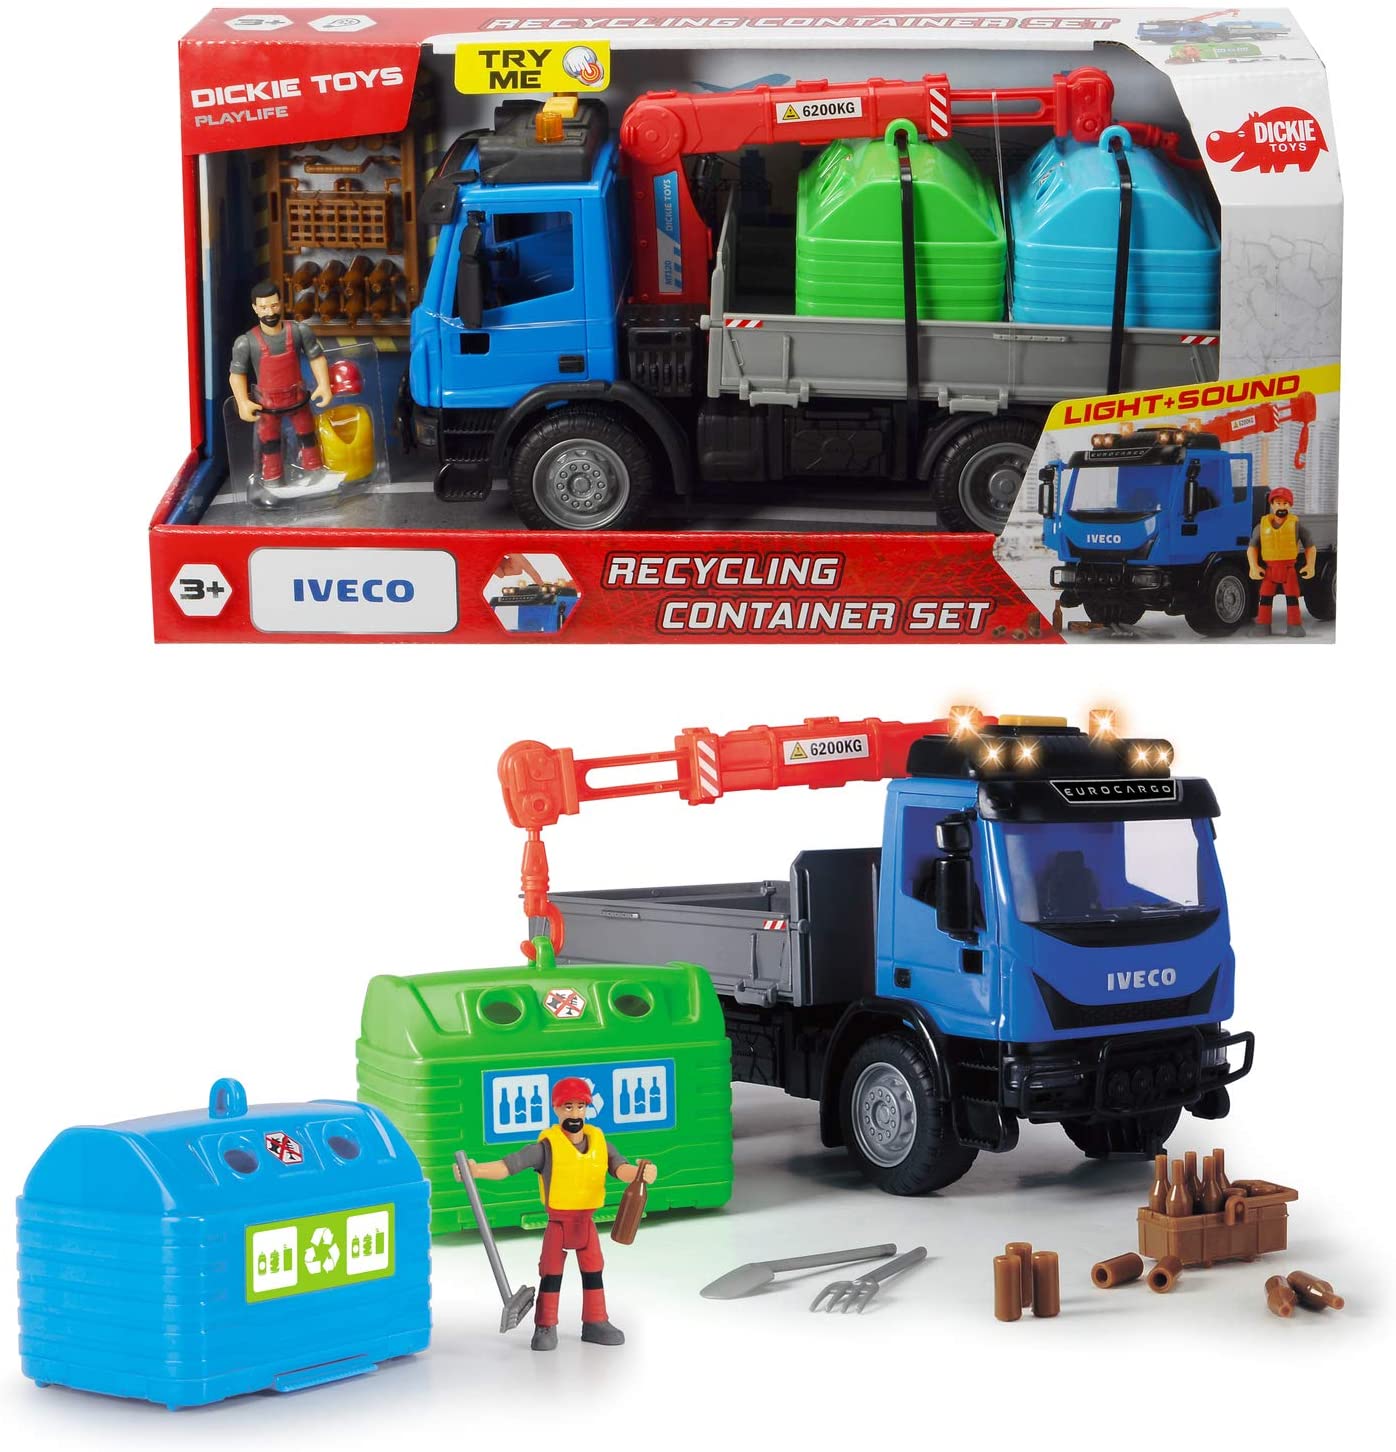 Set de joaca - Iveco Recycling Container Set | Dickie Toys